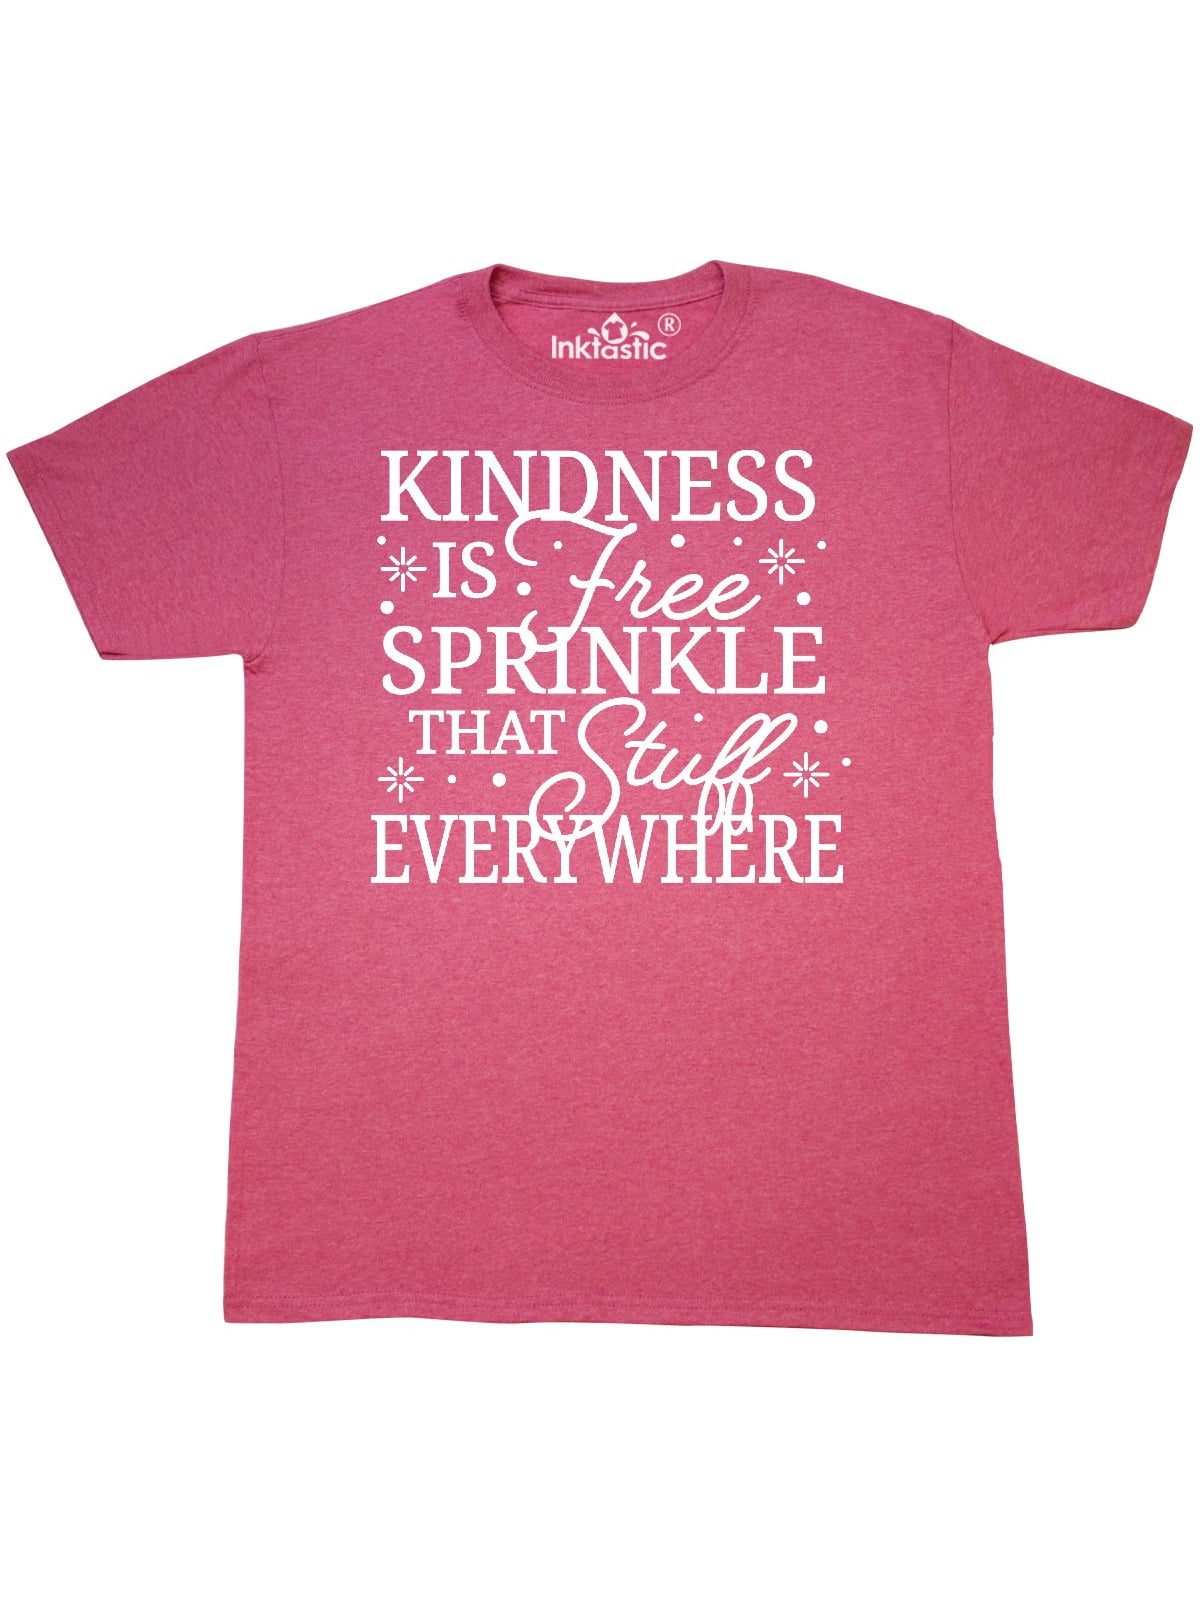 Kindness is free sprinkle that stuff everywhere shirt,be kind shirt,raglan,baseball shirt,